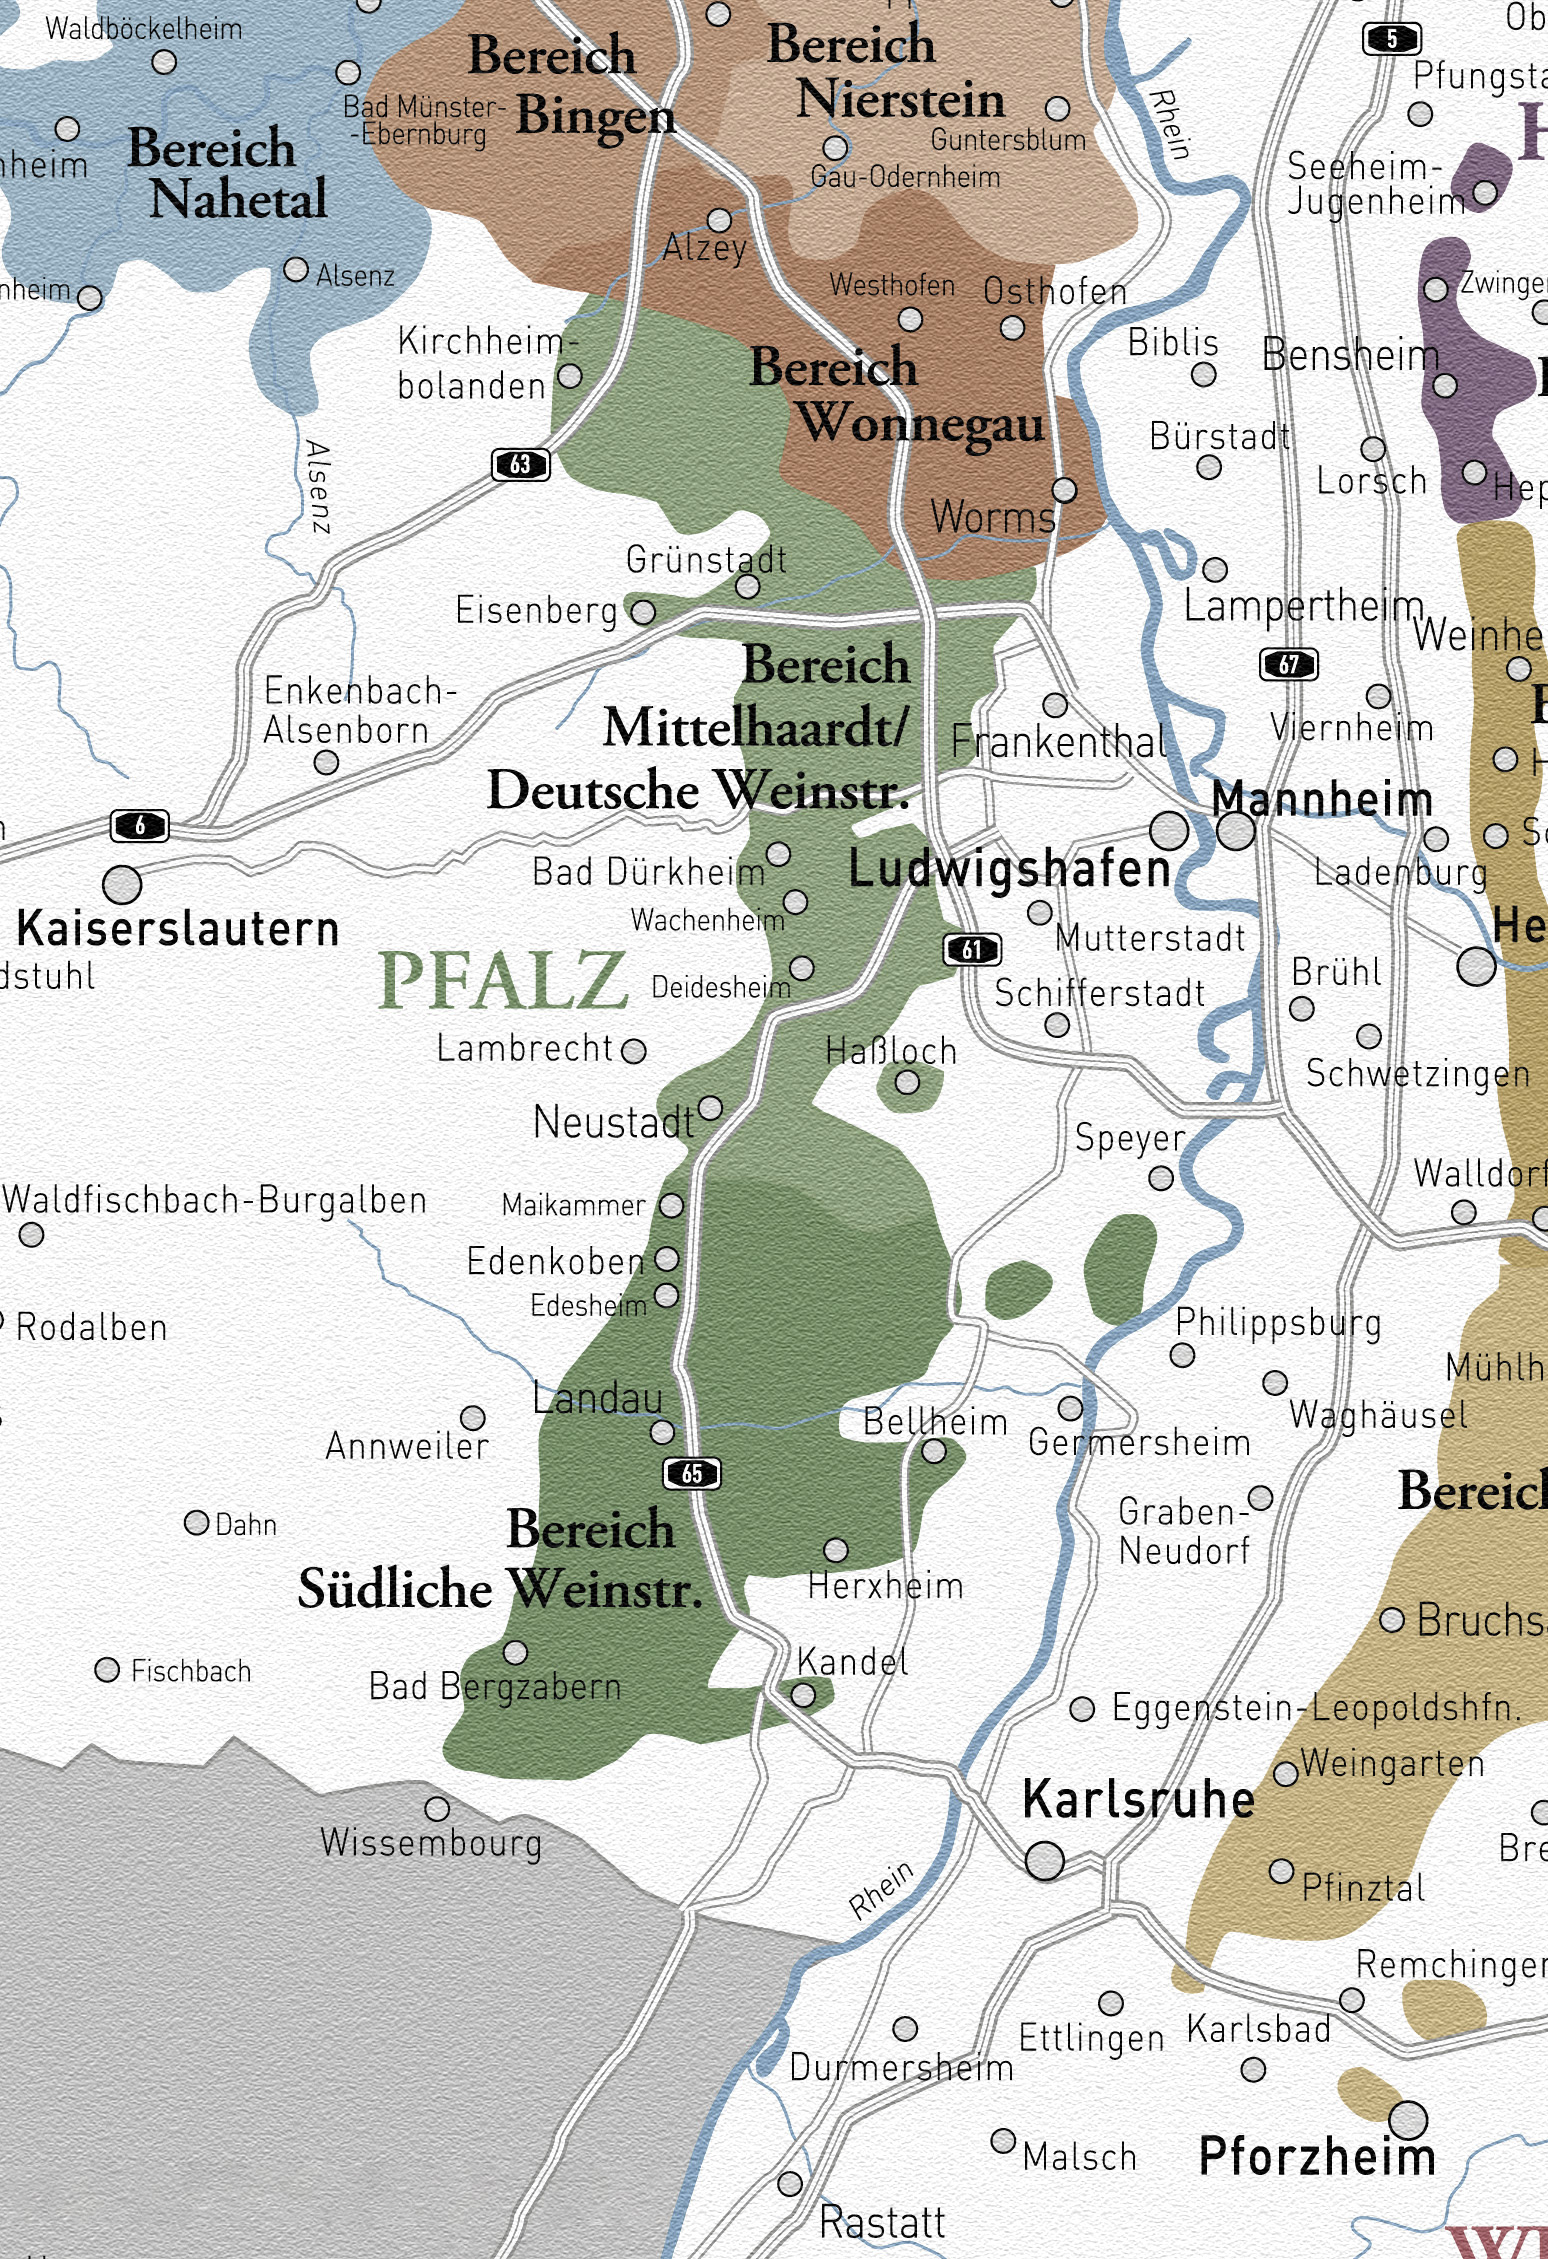 Regiões do Pfalz